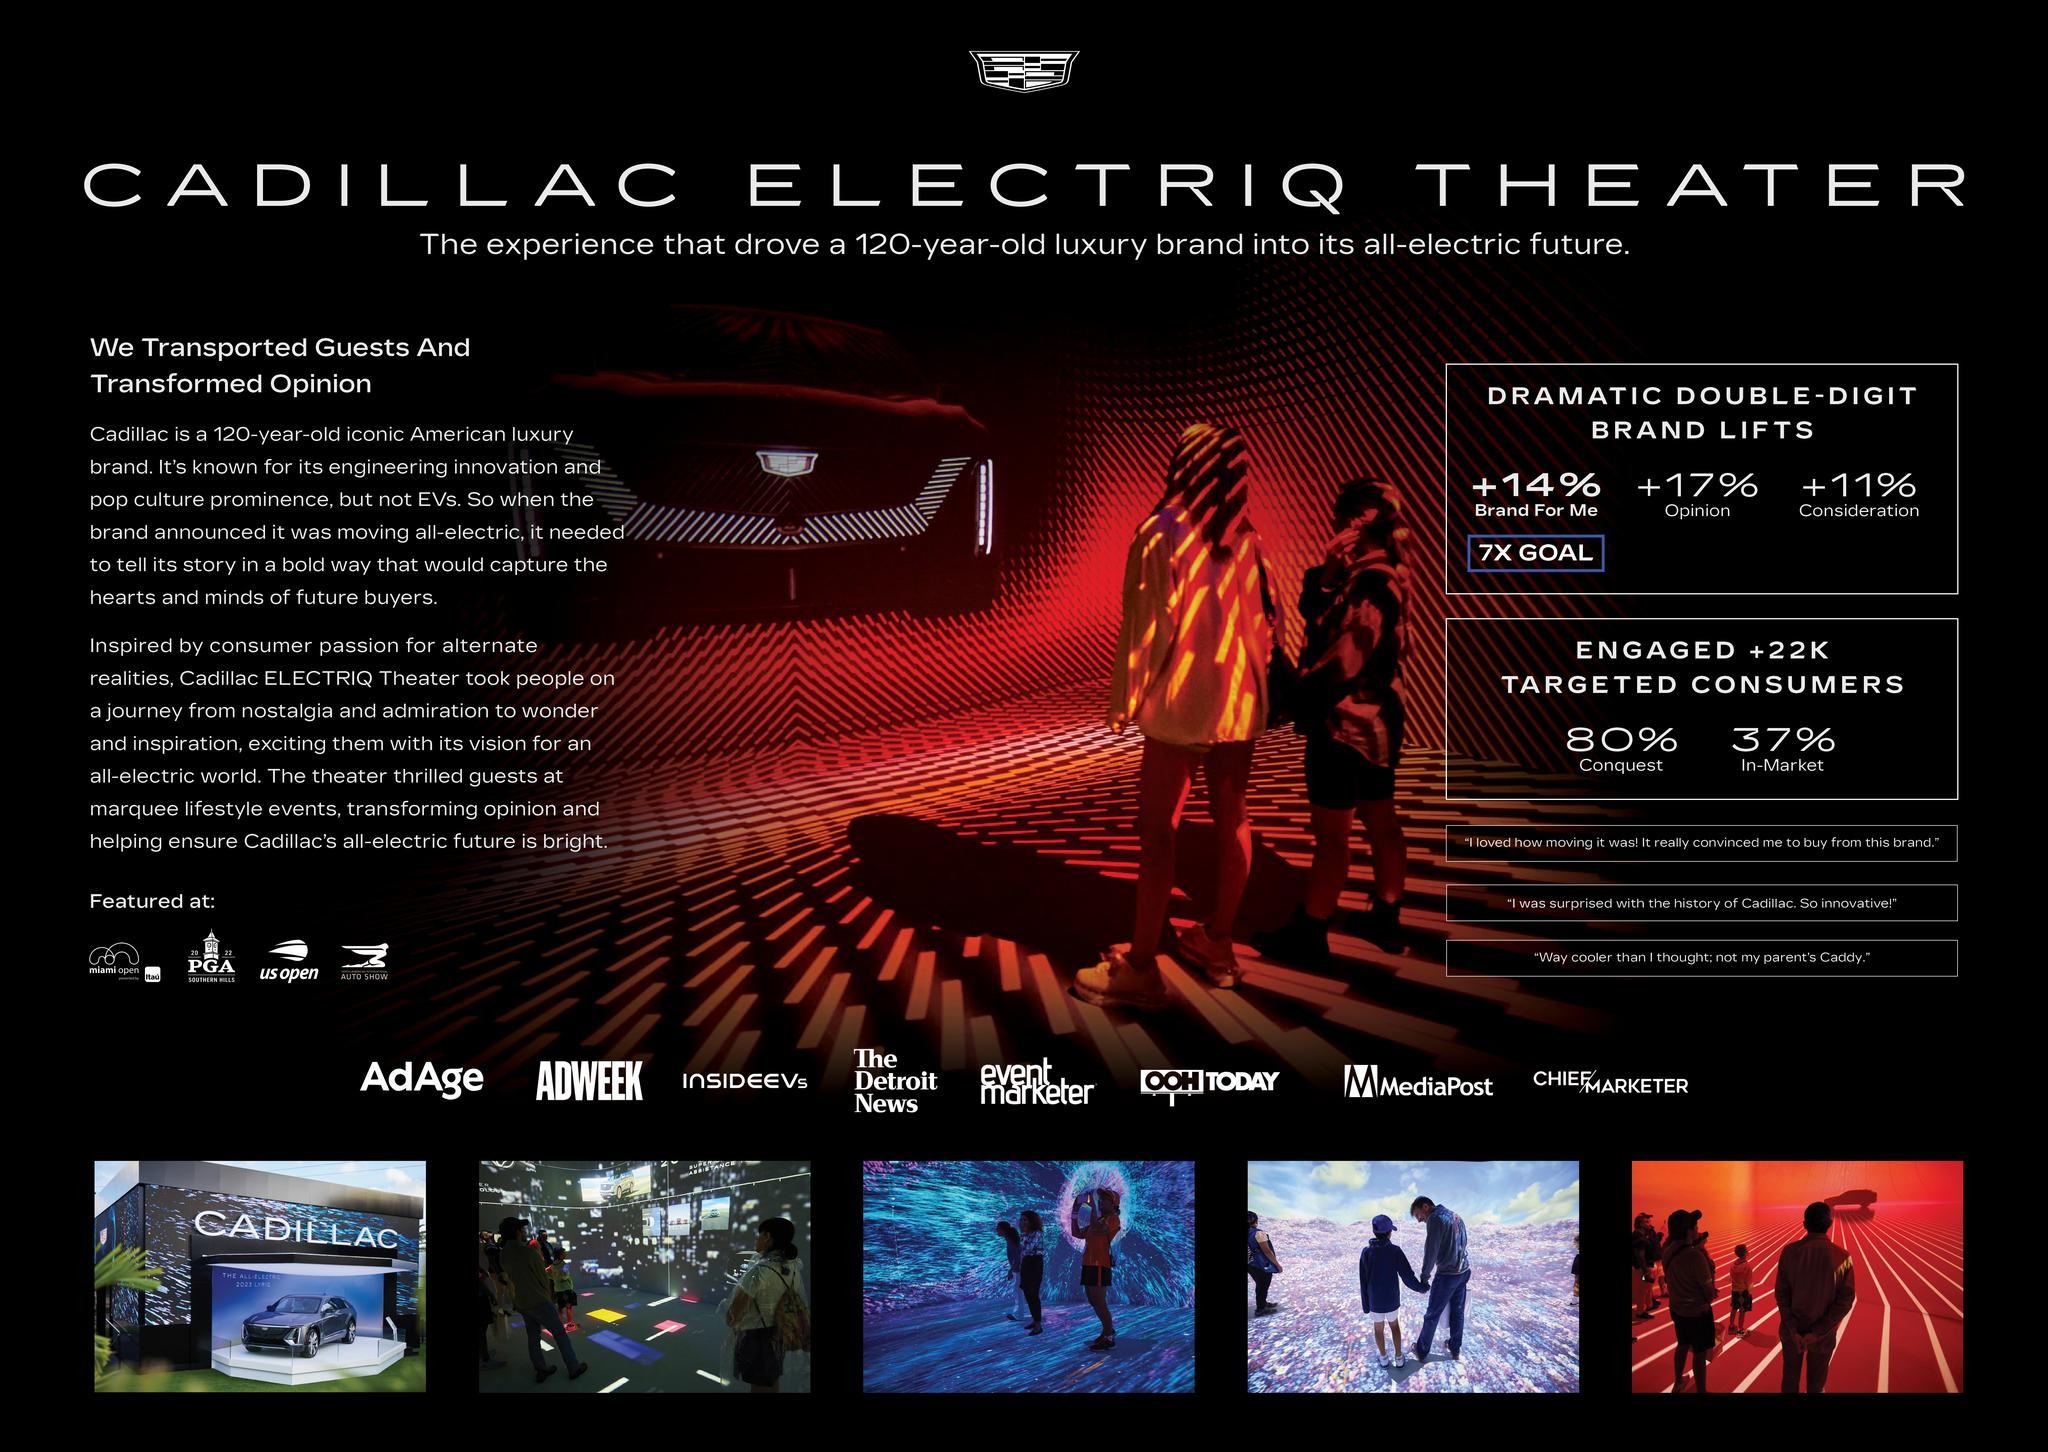 The Cadillac ELECTRIQ Theater